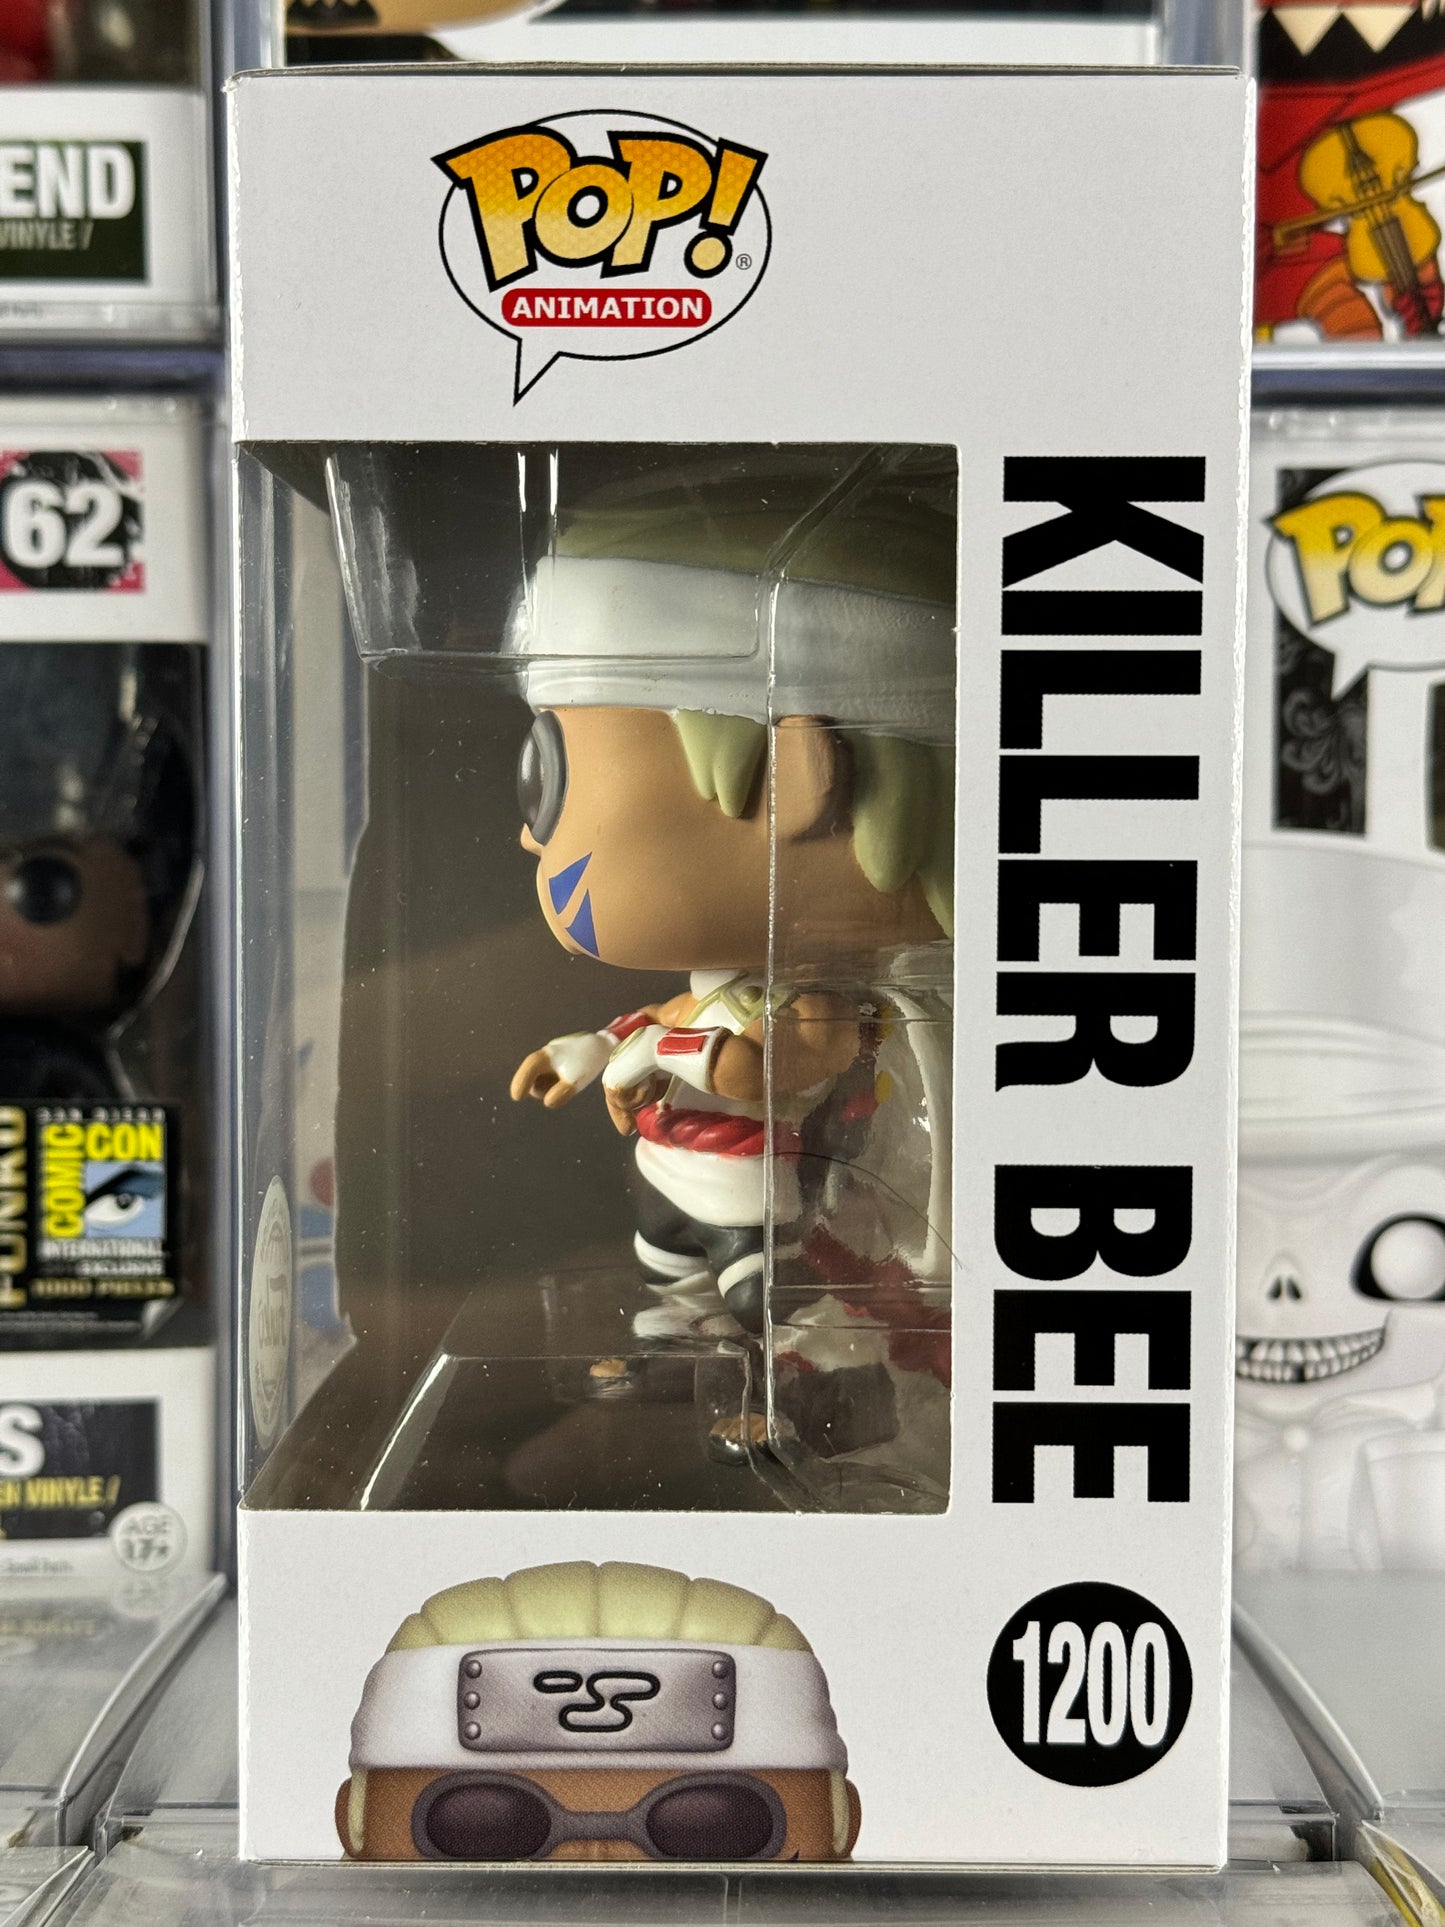 Naruto Shippuden - Killer Bee (1200)